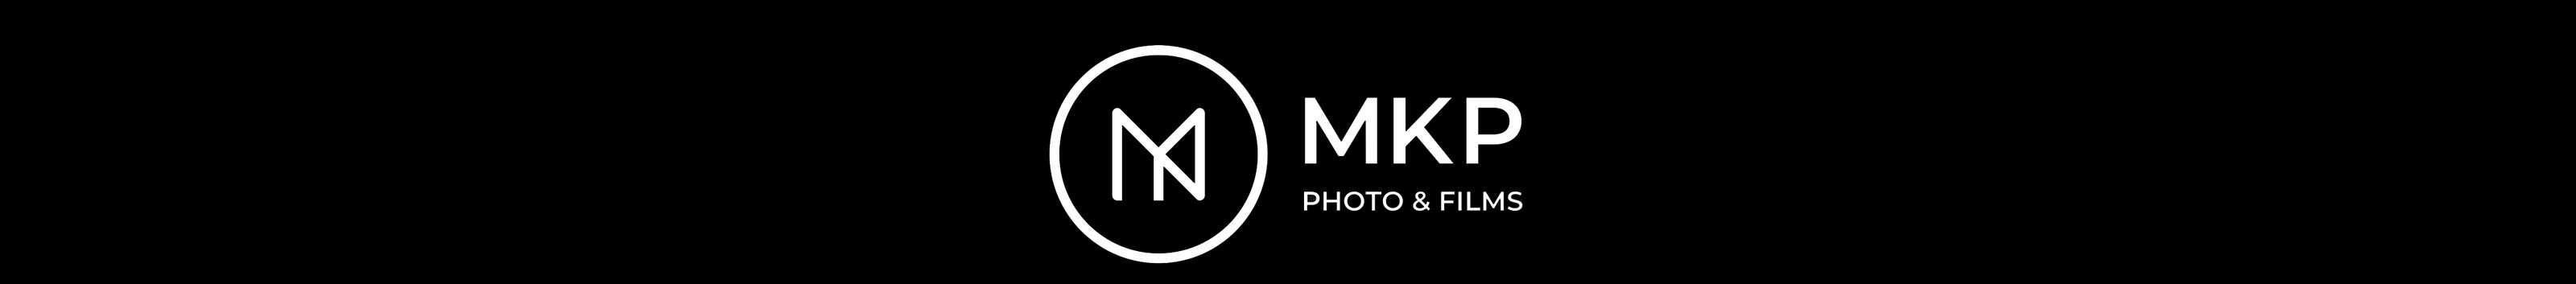 MKP Photo & Films profil başlığı